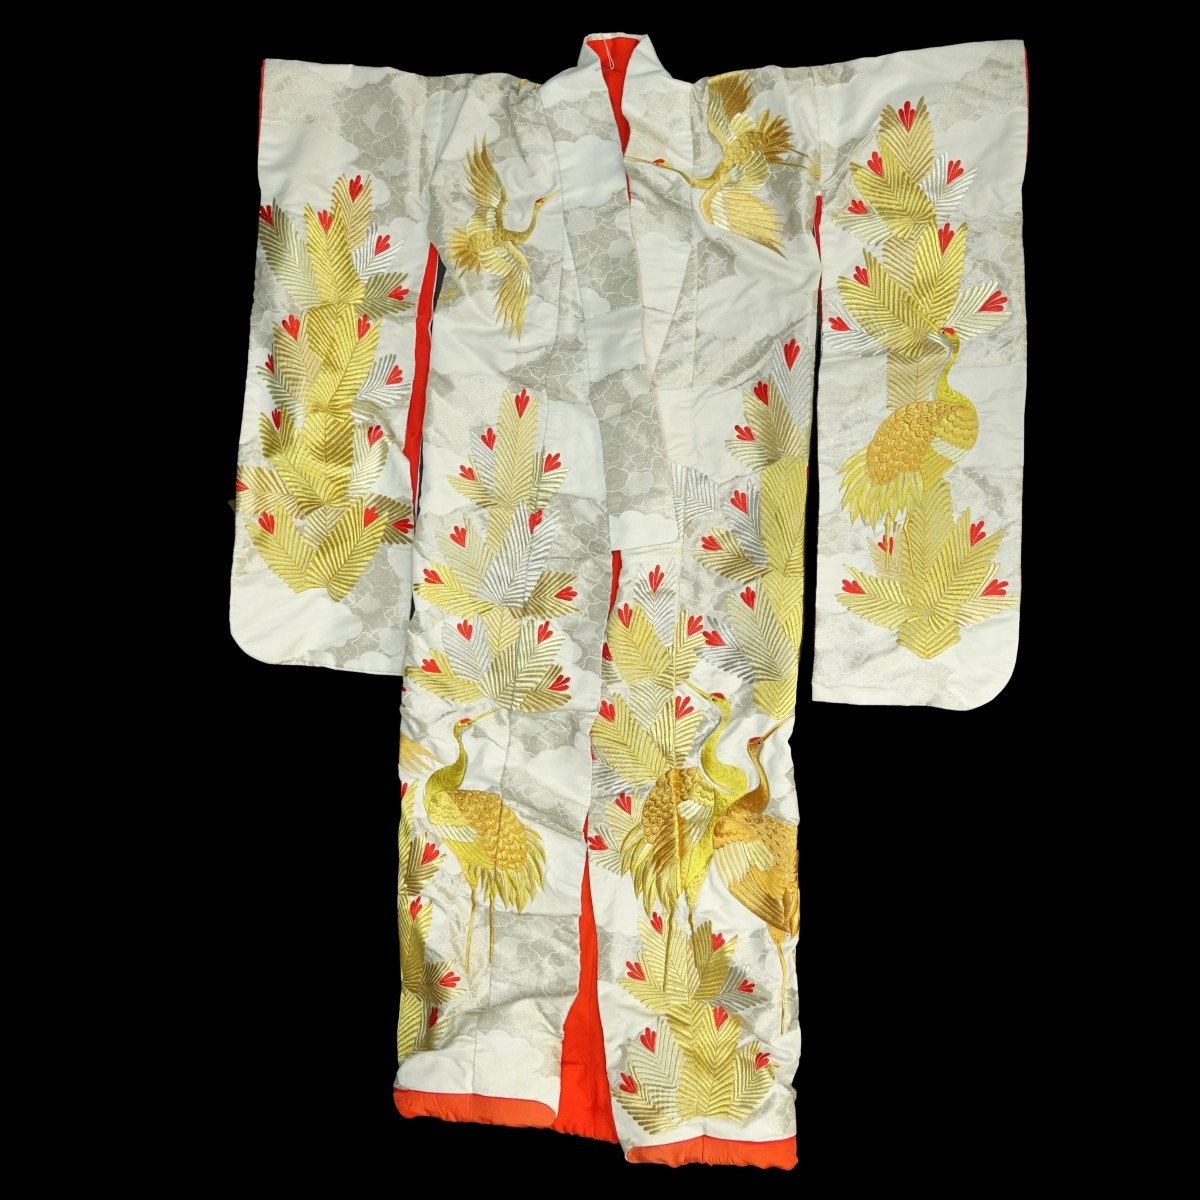 Chinese Kimono